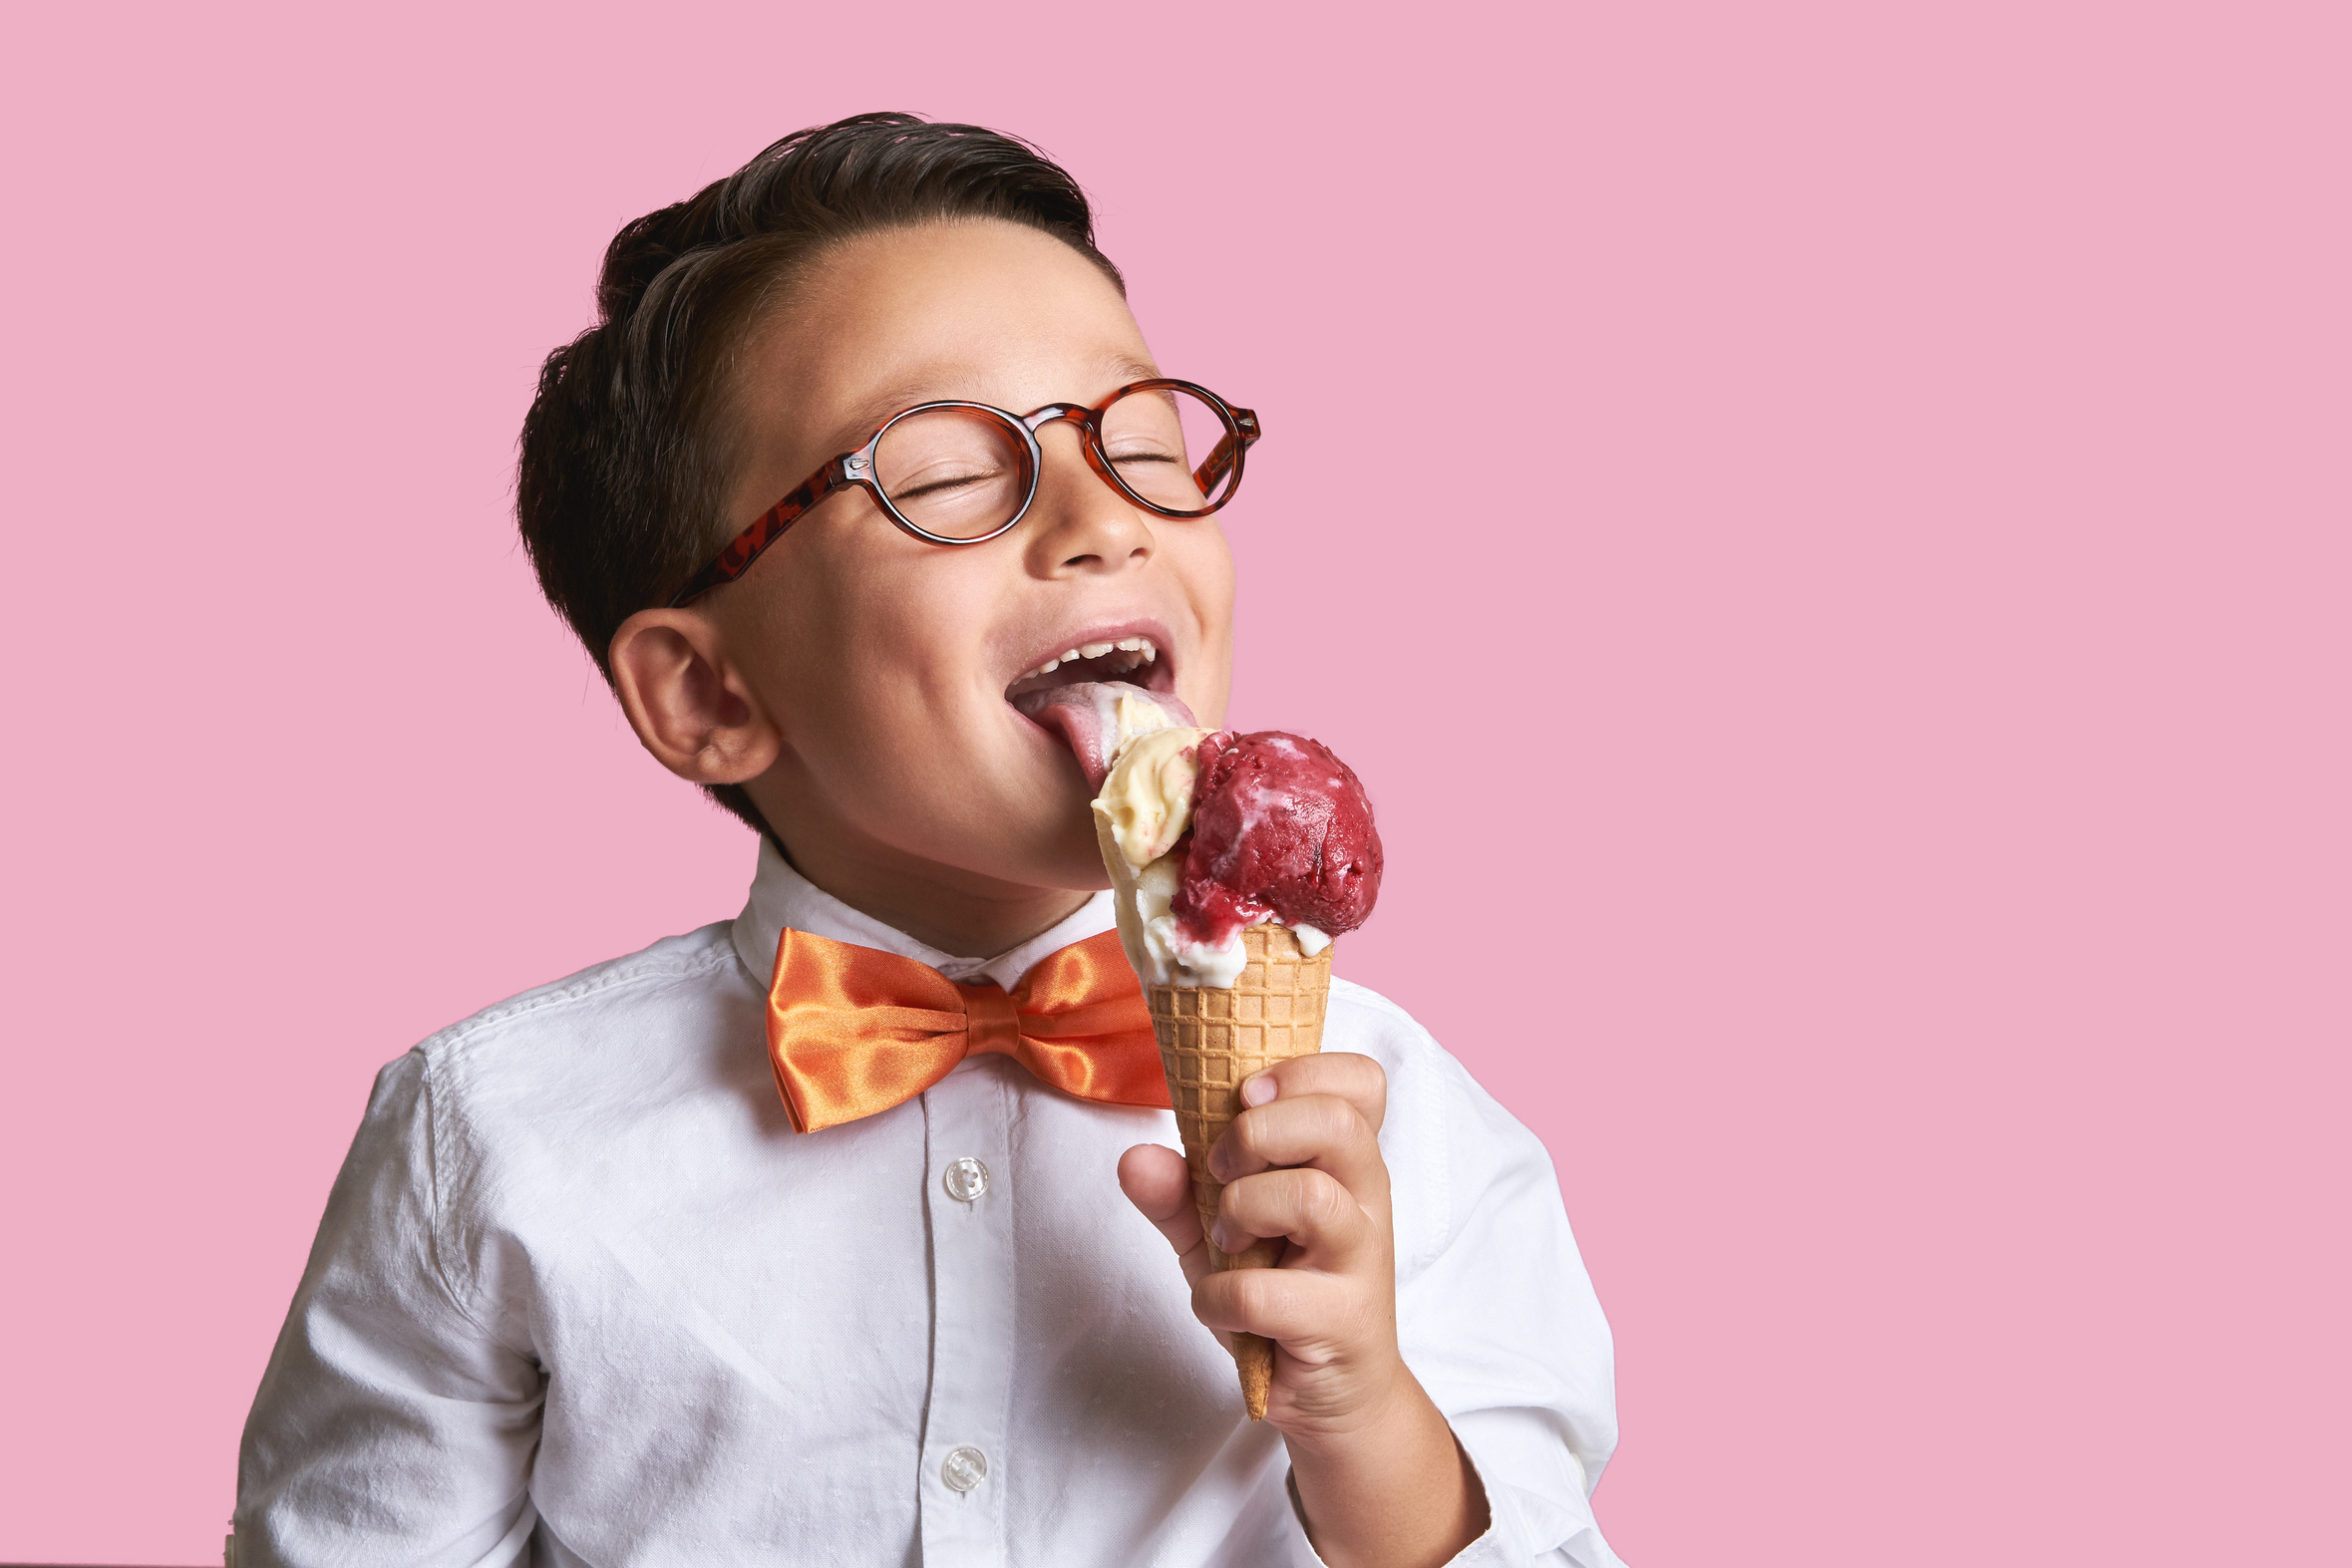 Child eating ice cream